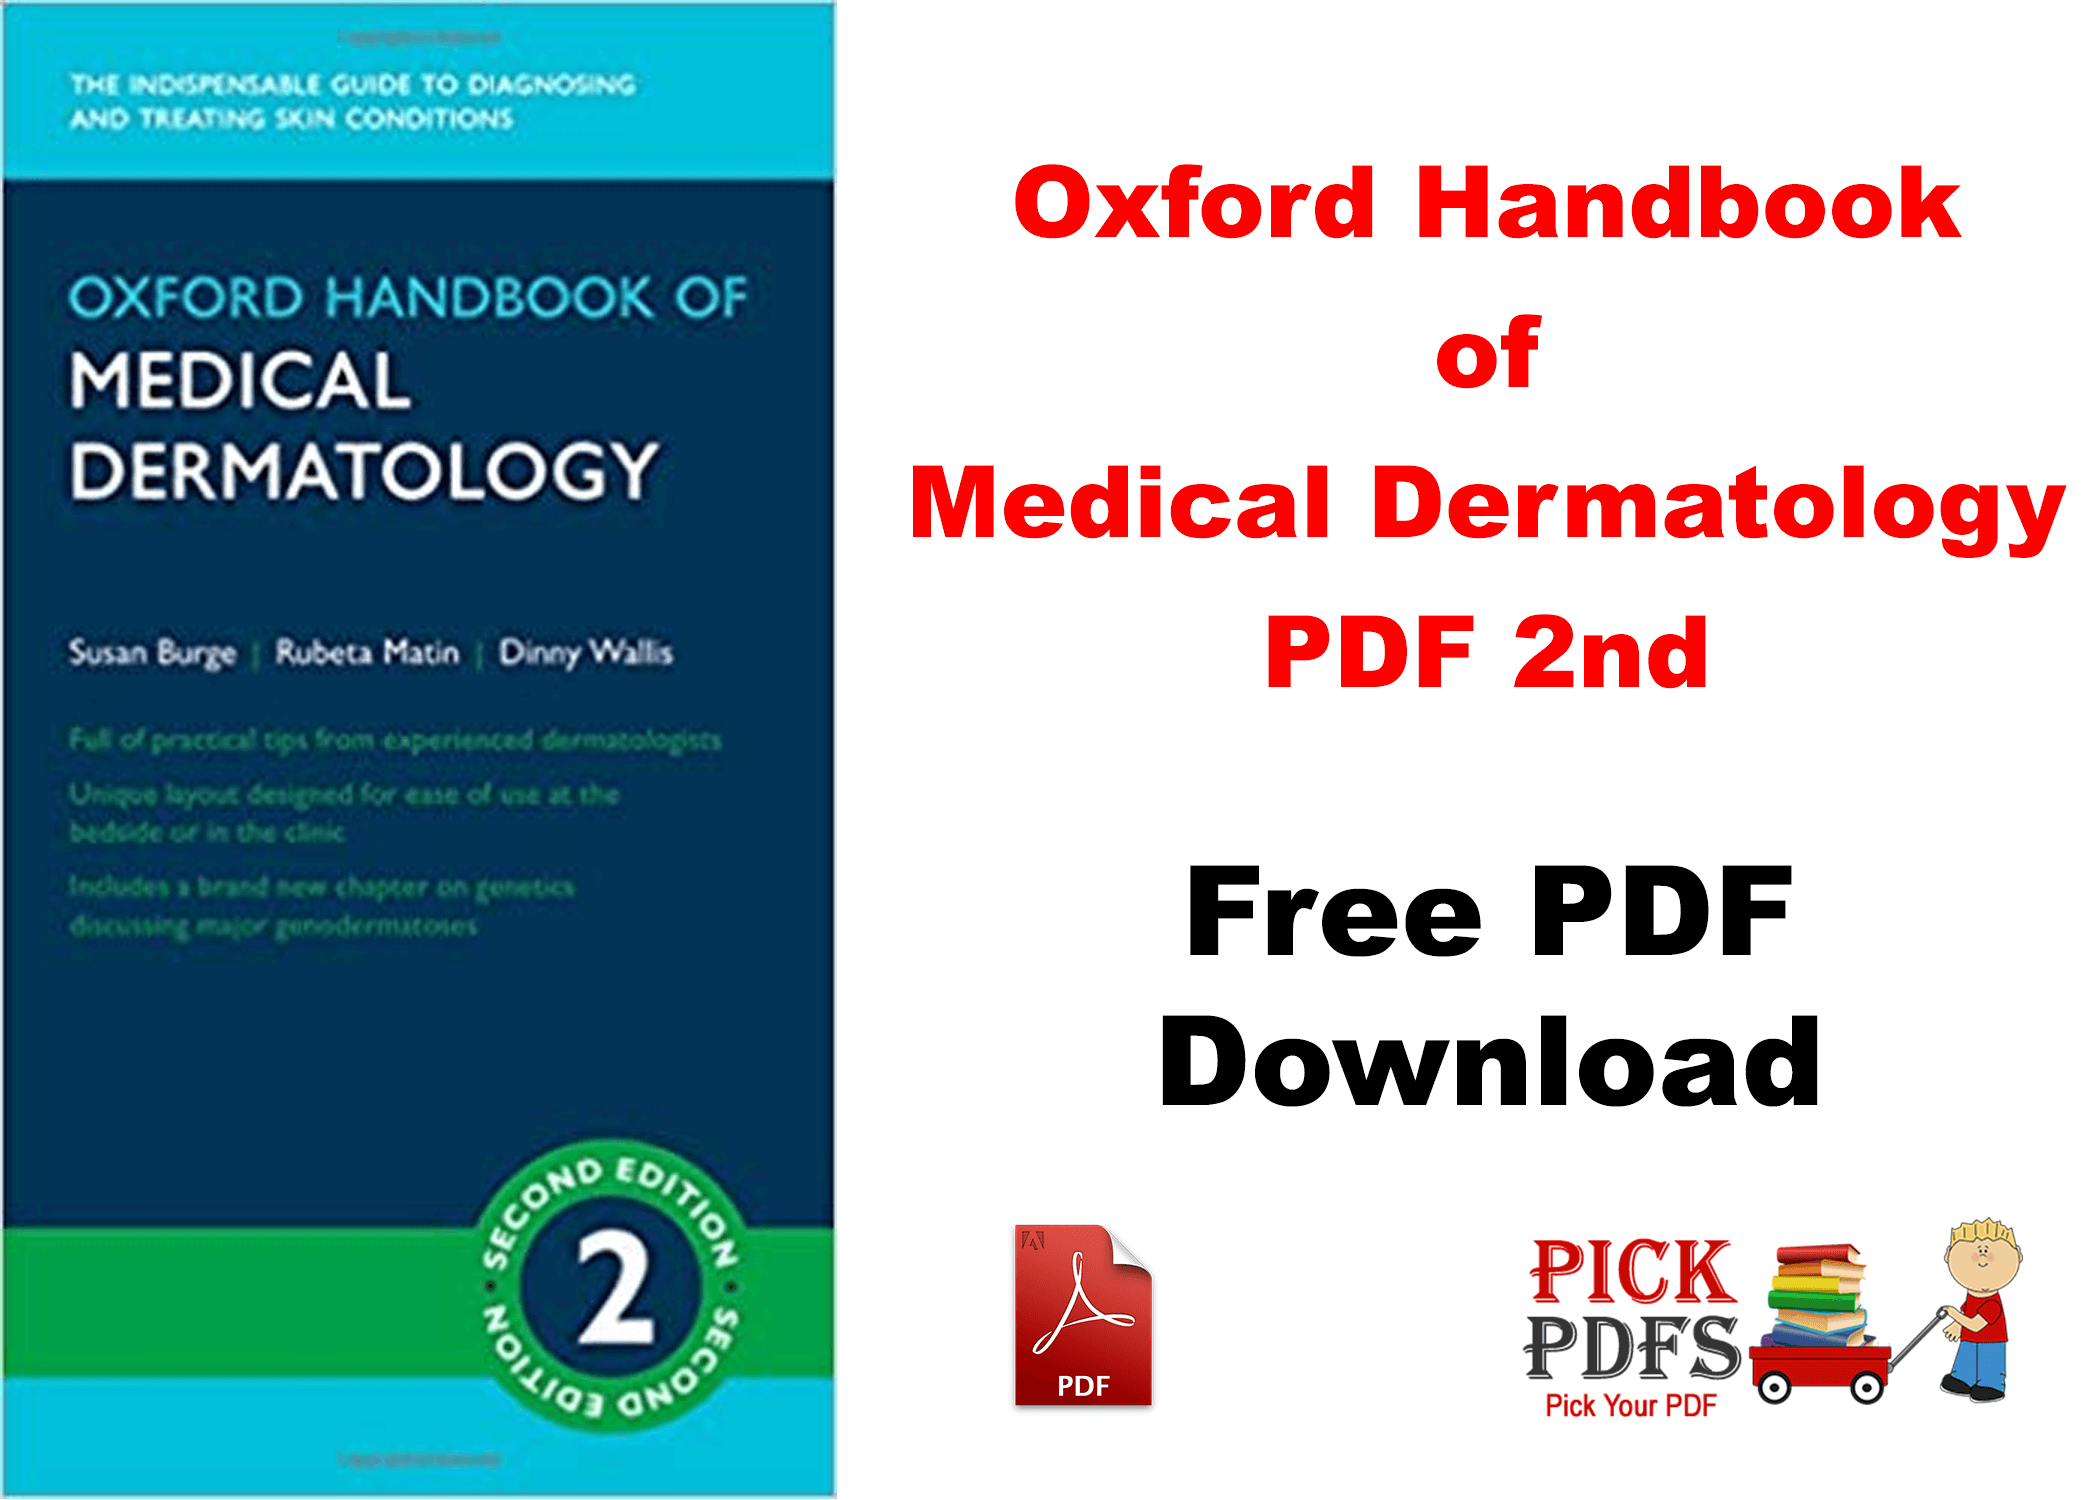 https://pickpdfs.com/diagnosis-and-treatment-4th-edition-pdf-free-pdf-epub-medical-books/